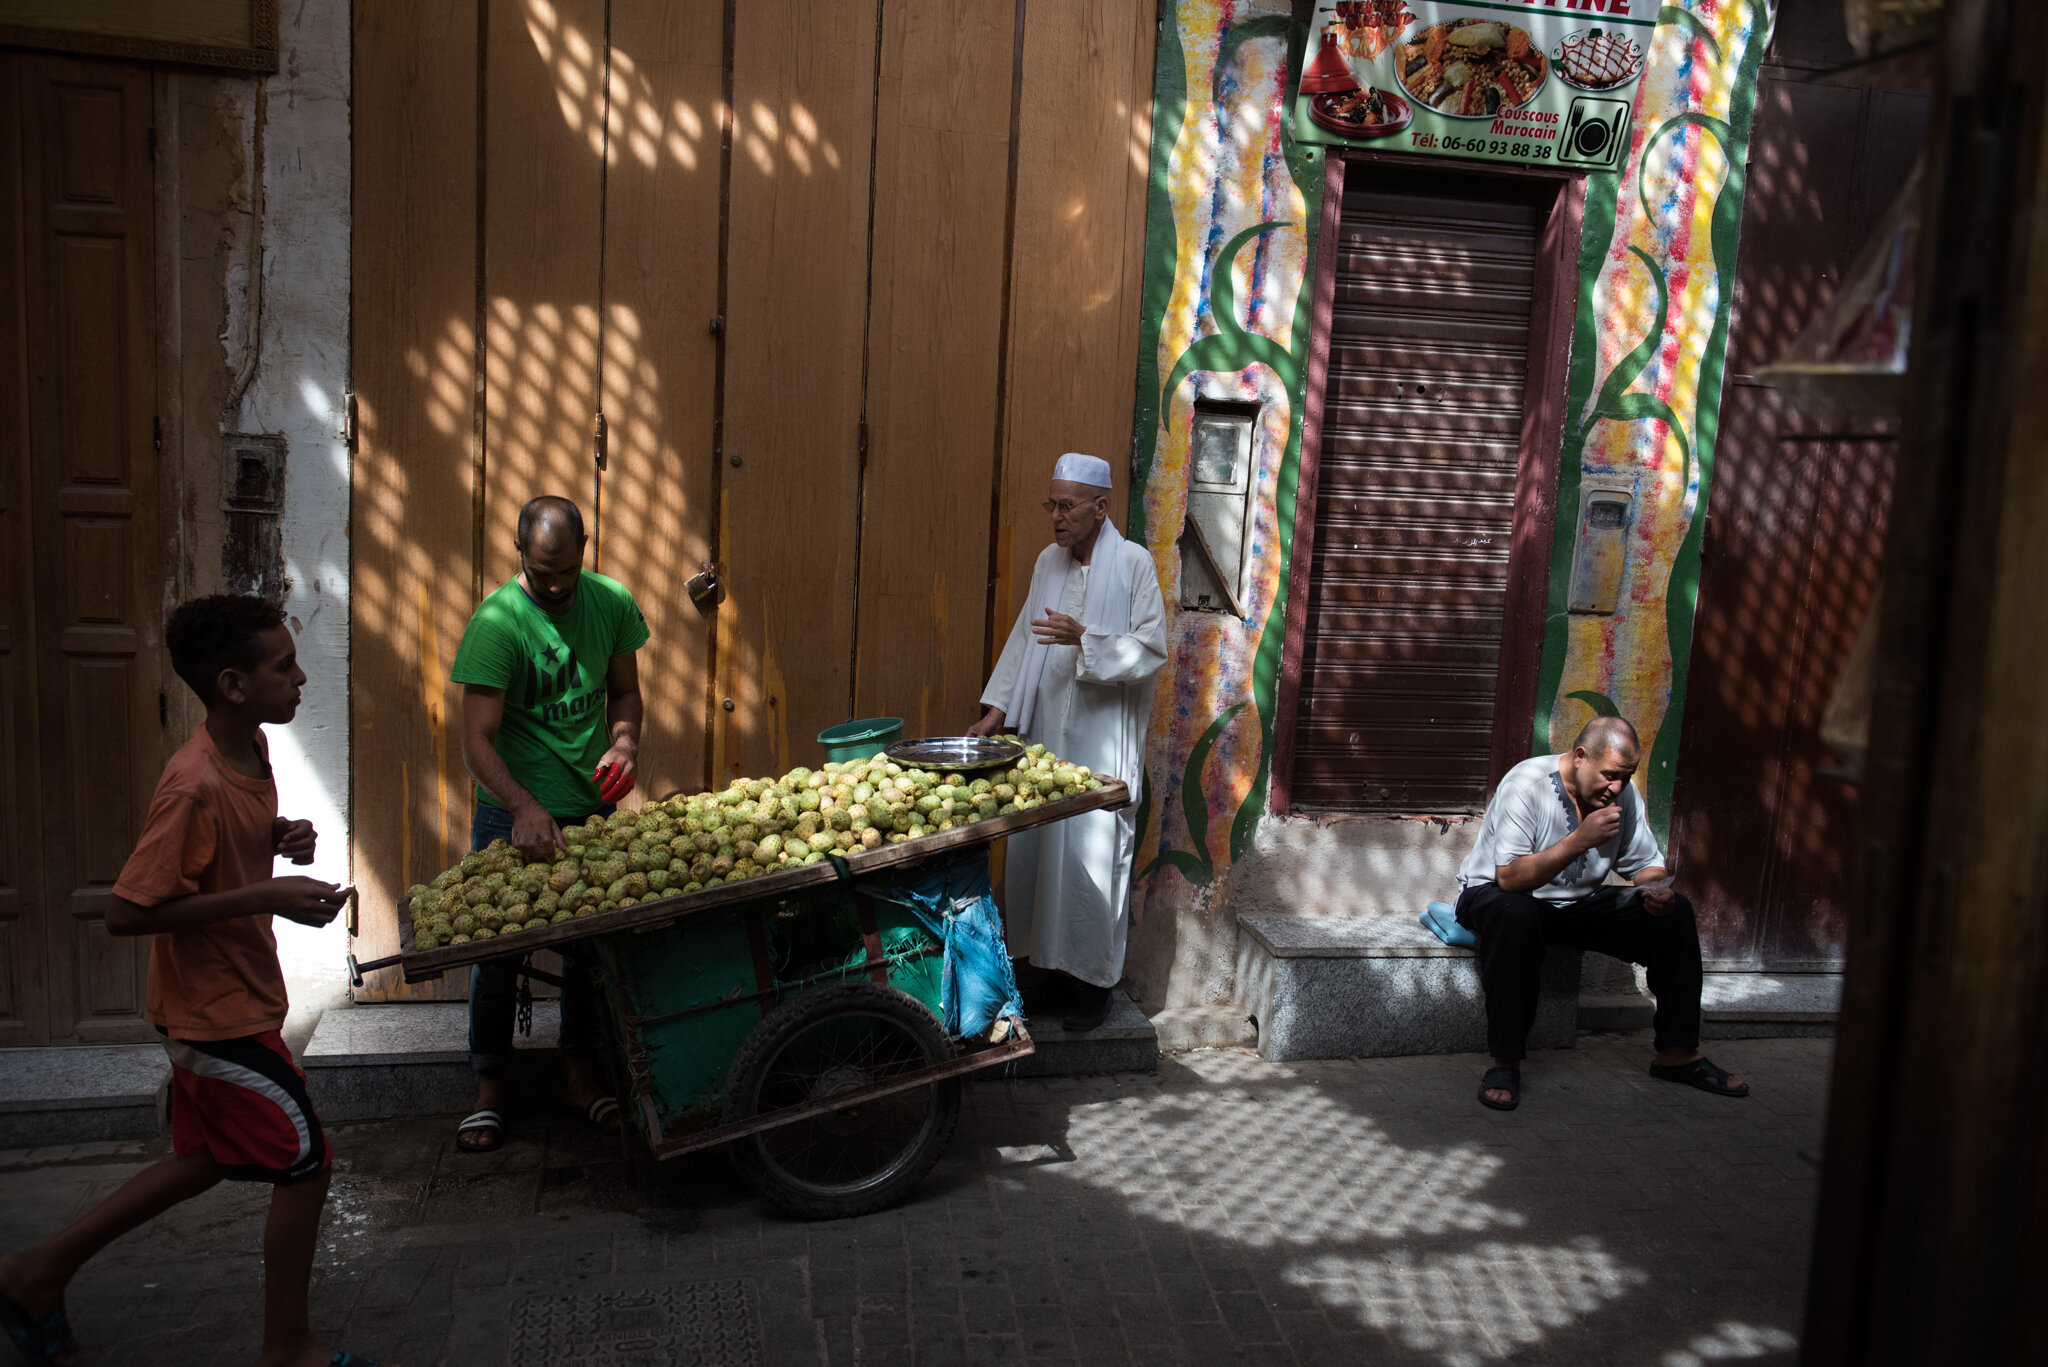    Morocco - Fes     Man selling fruits 